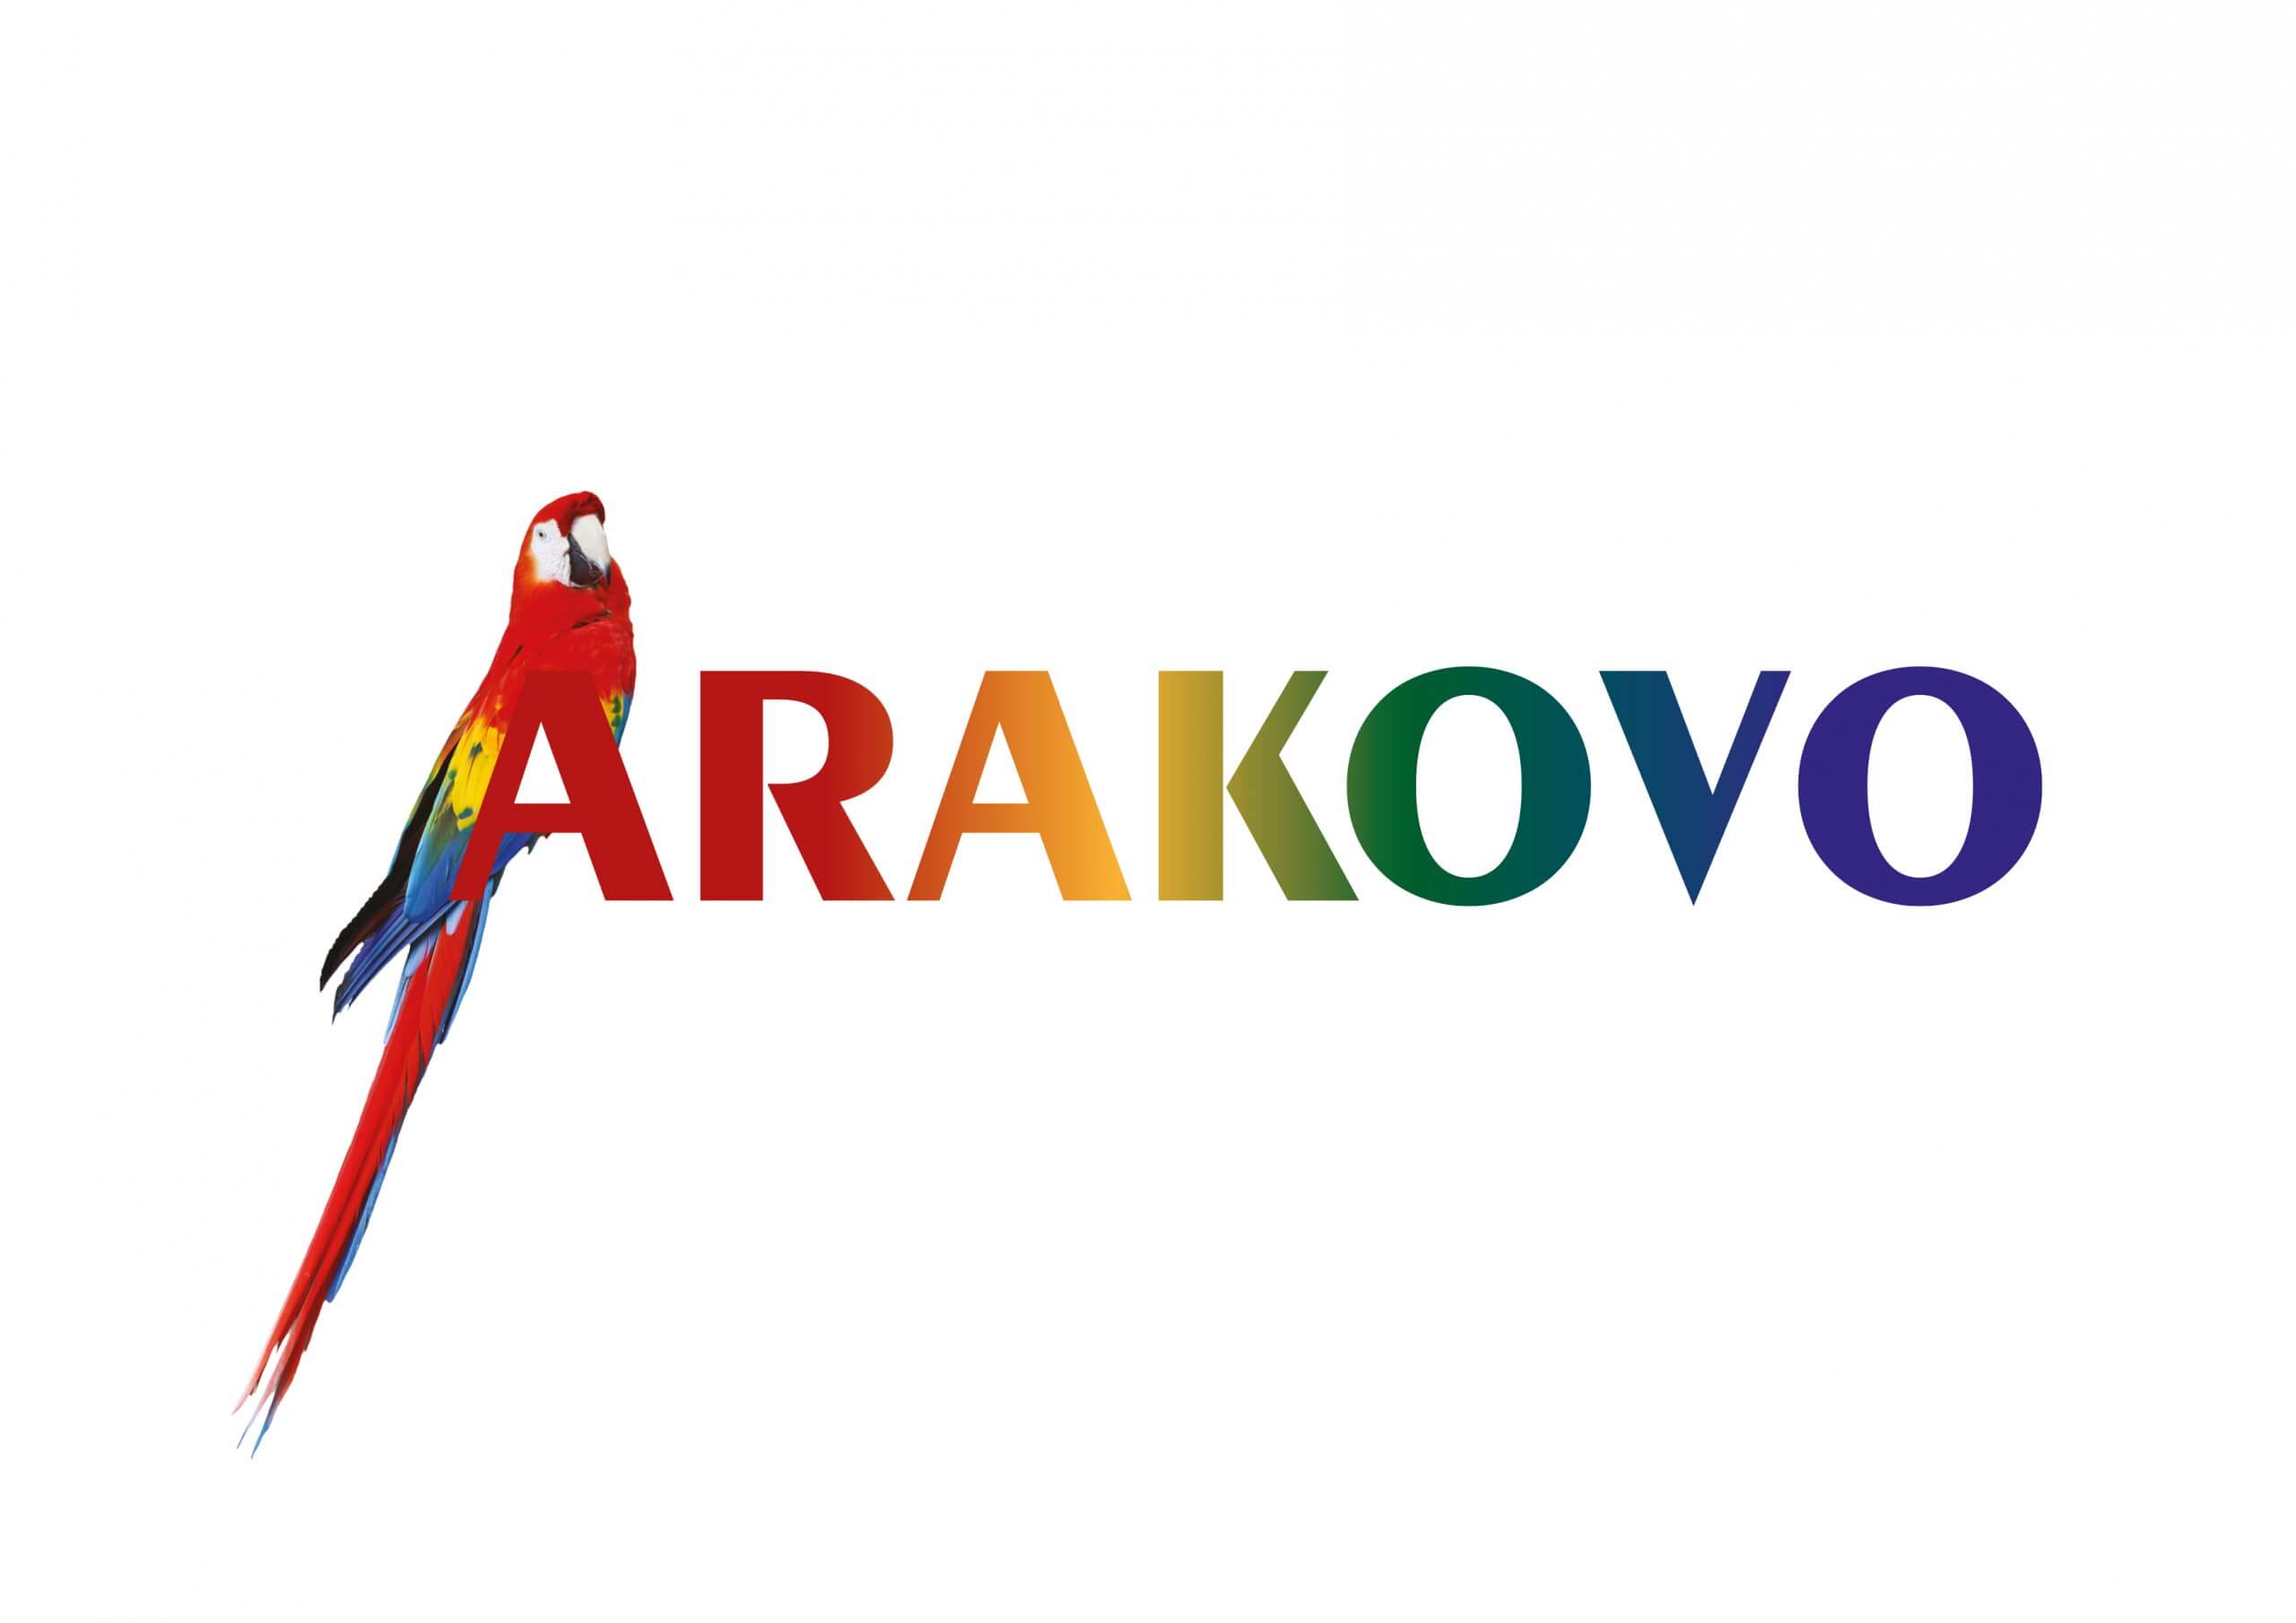 Arakovo